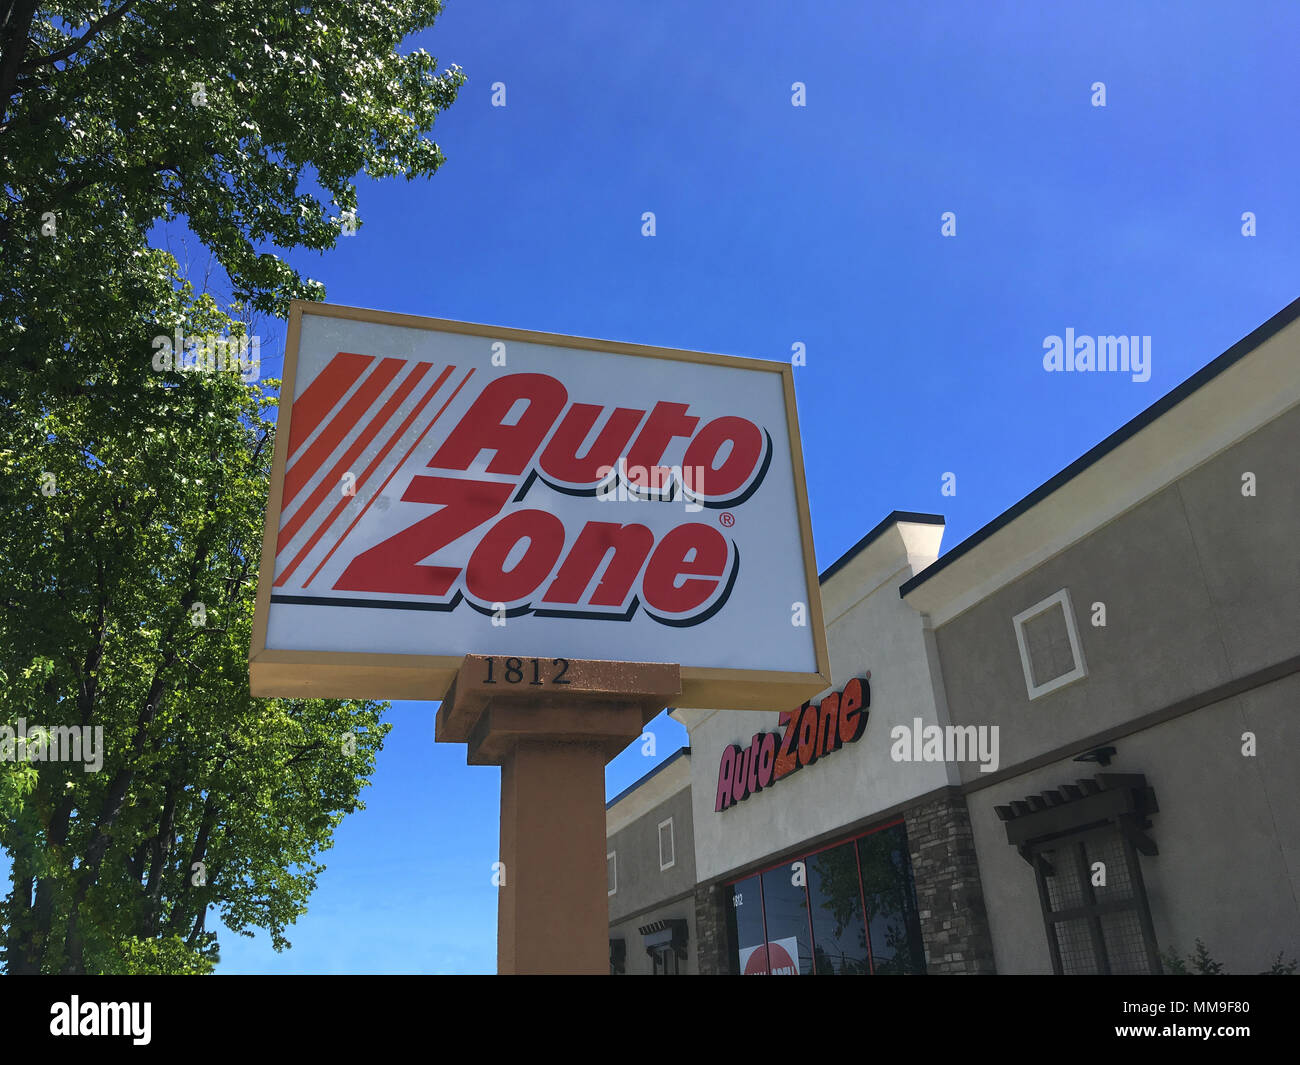 Autozone Store and Sign in San Jose California Stock Photo